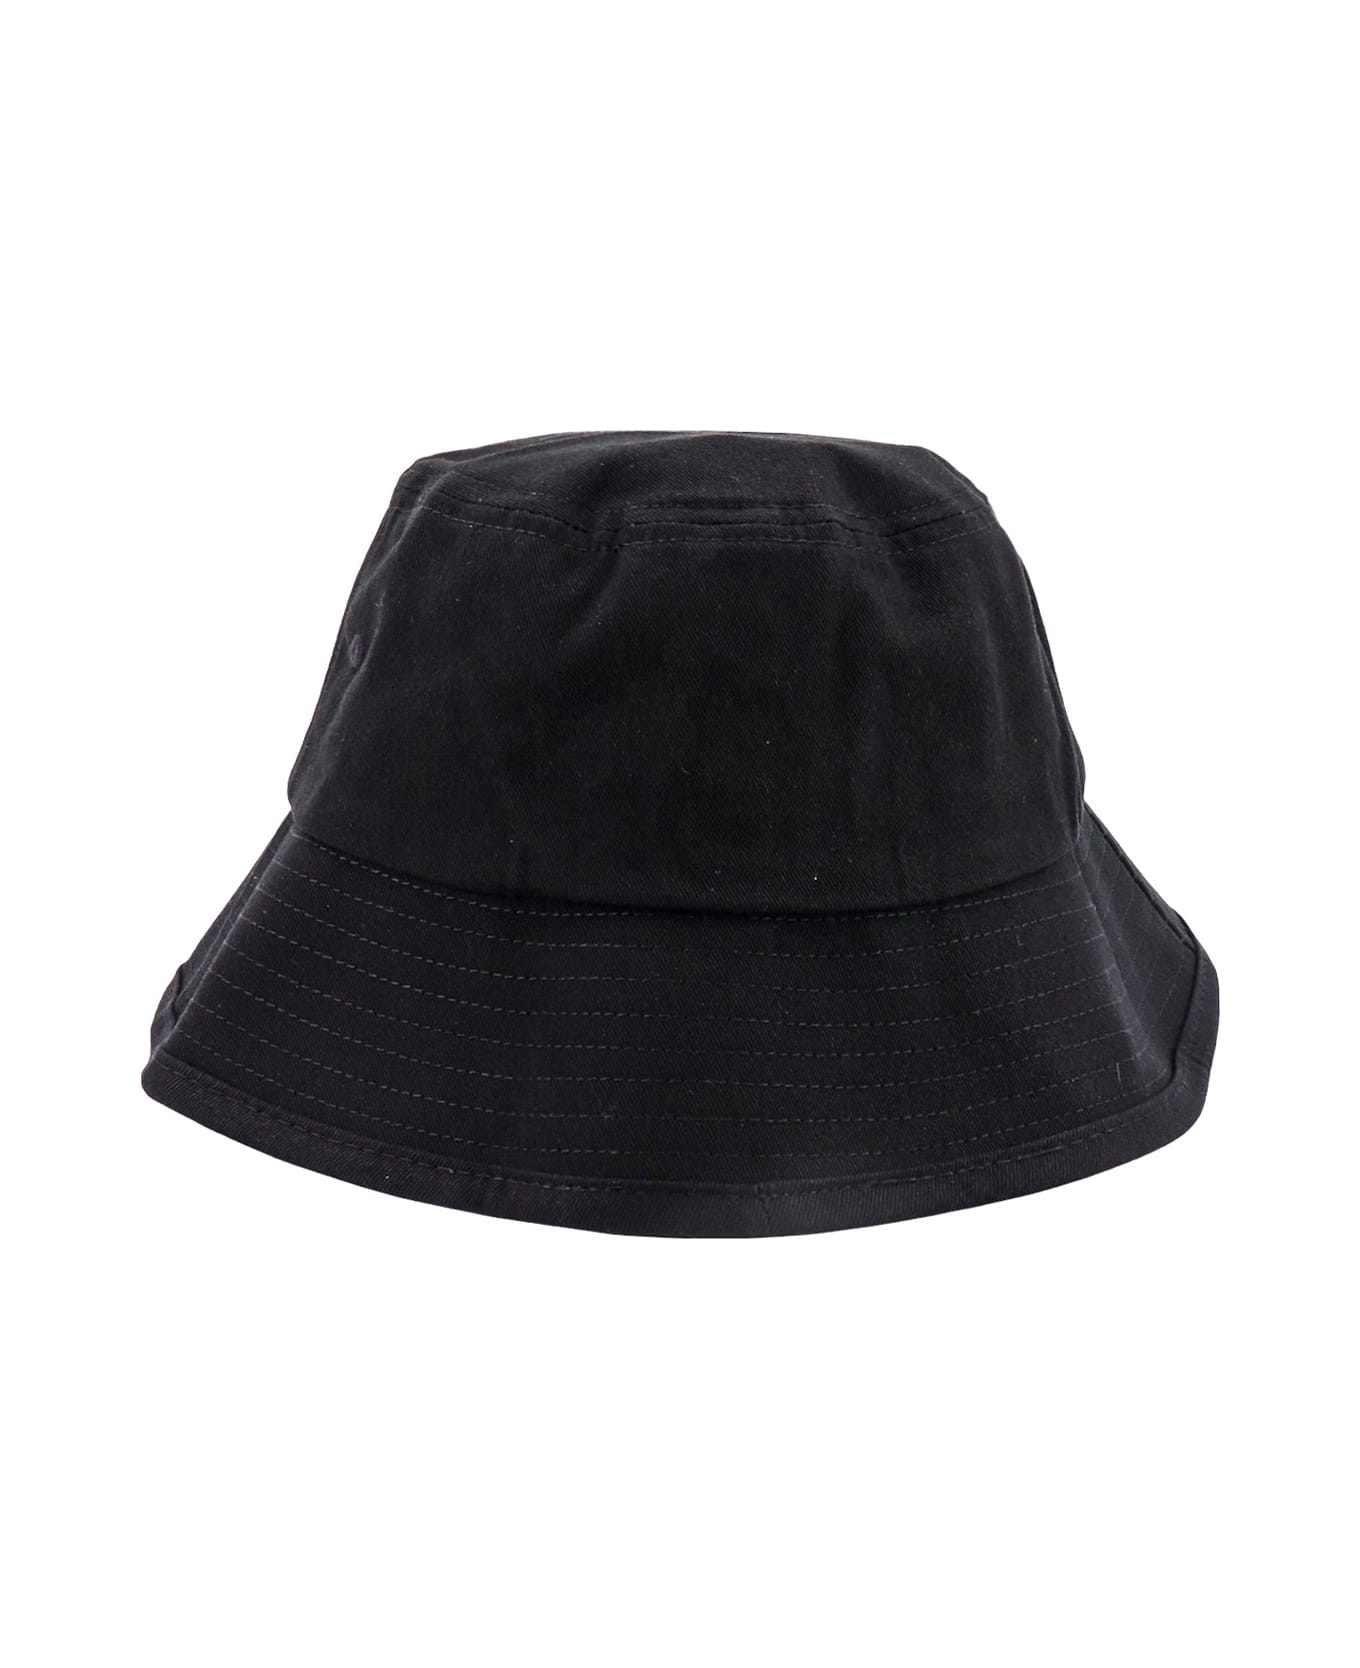 Études Cloche - Black 帽子